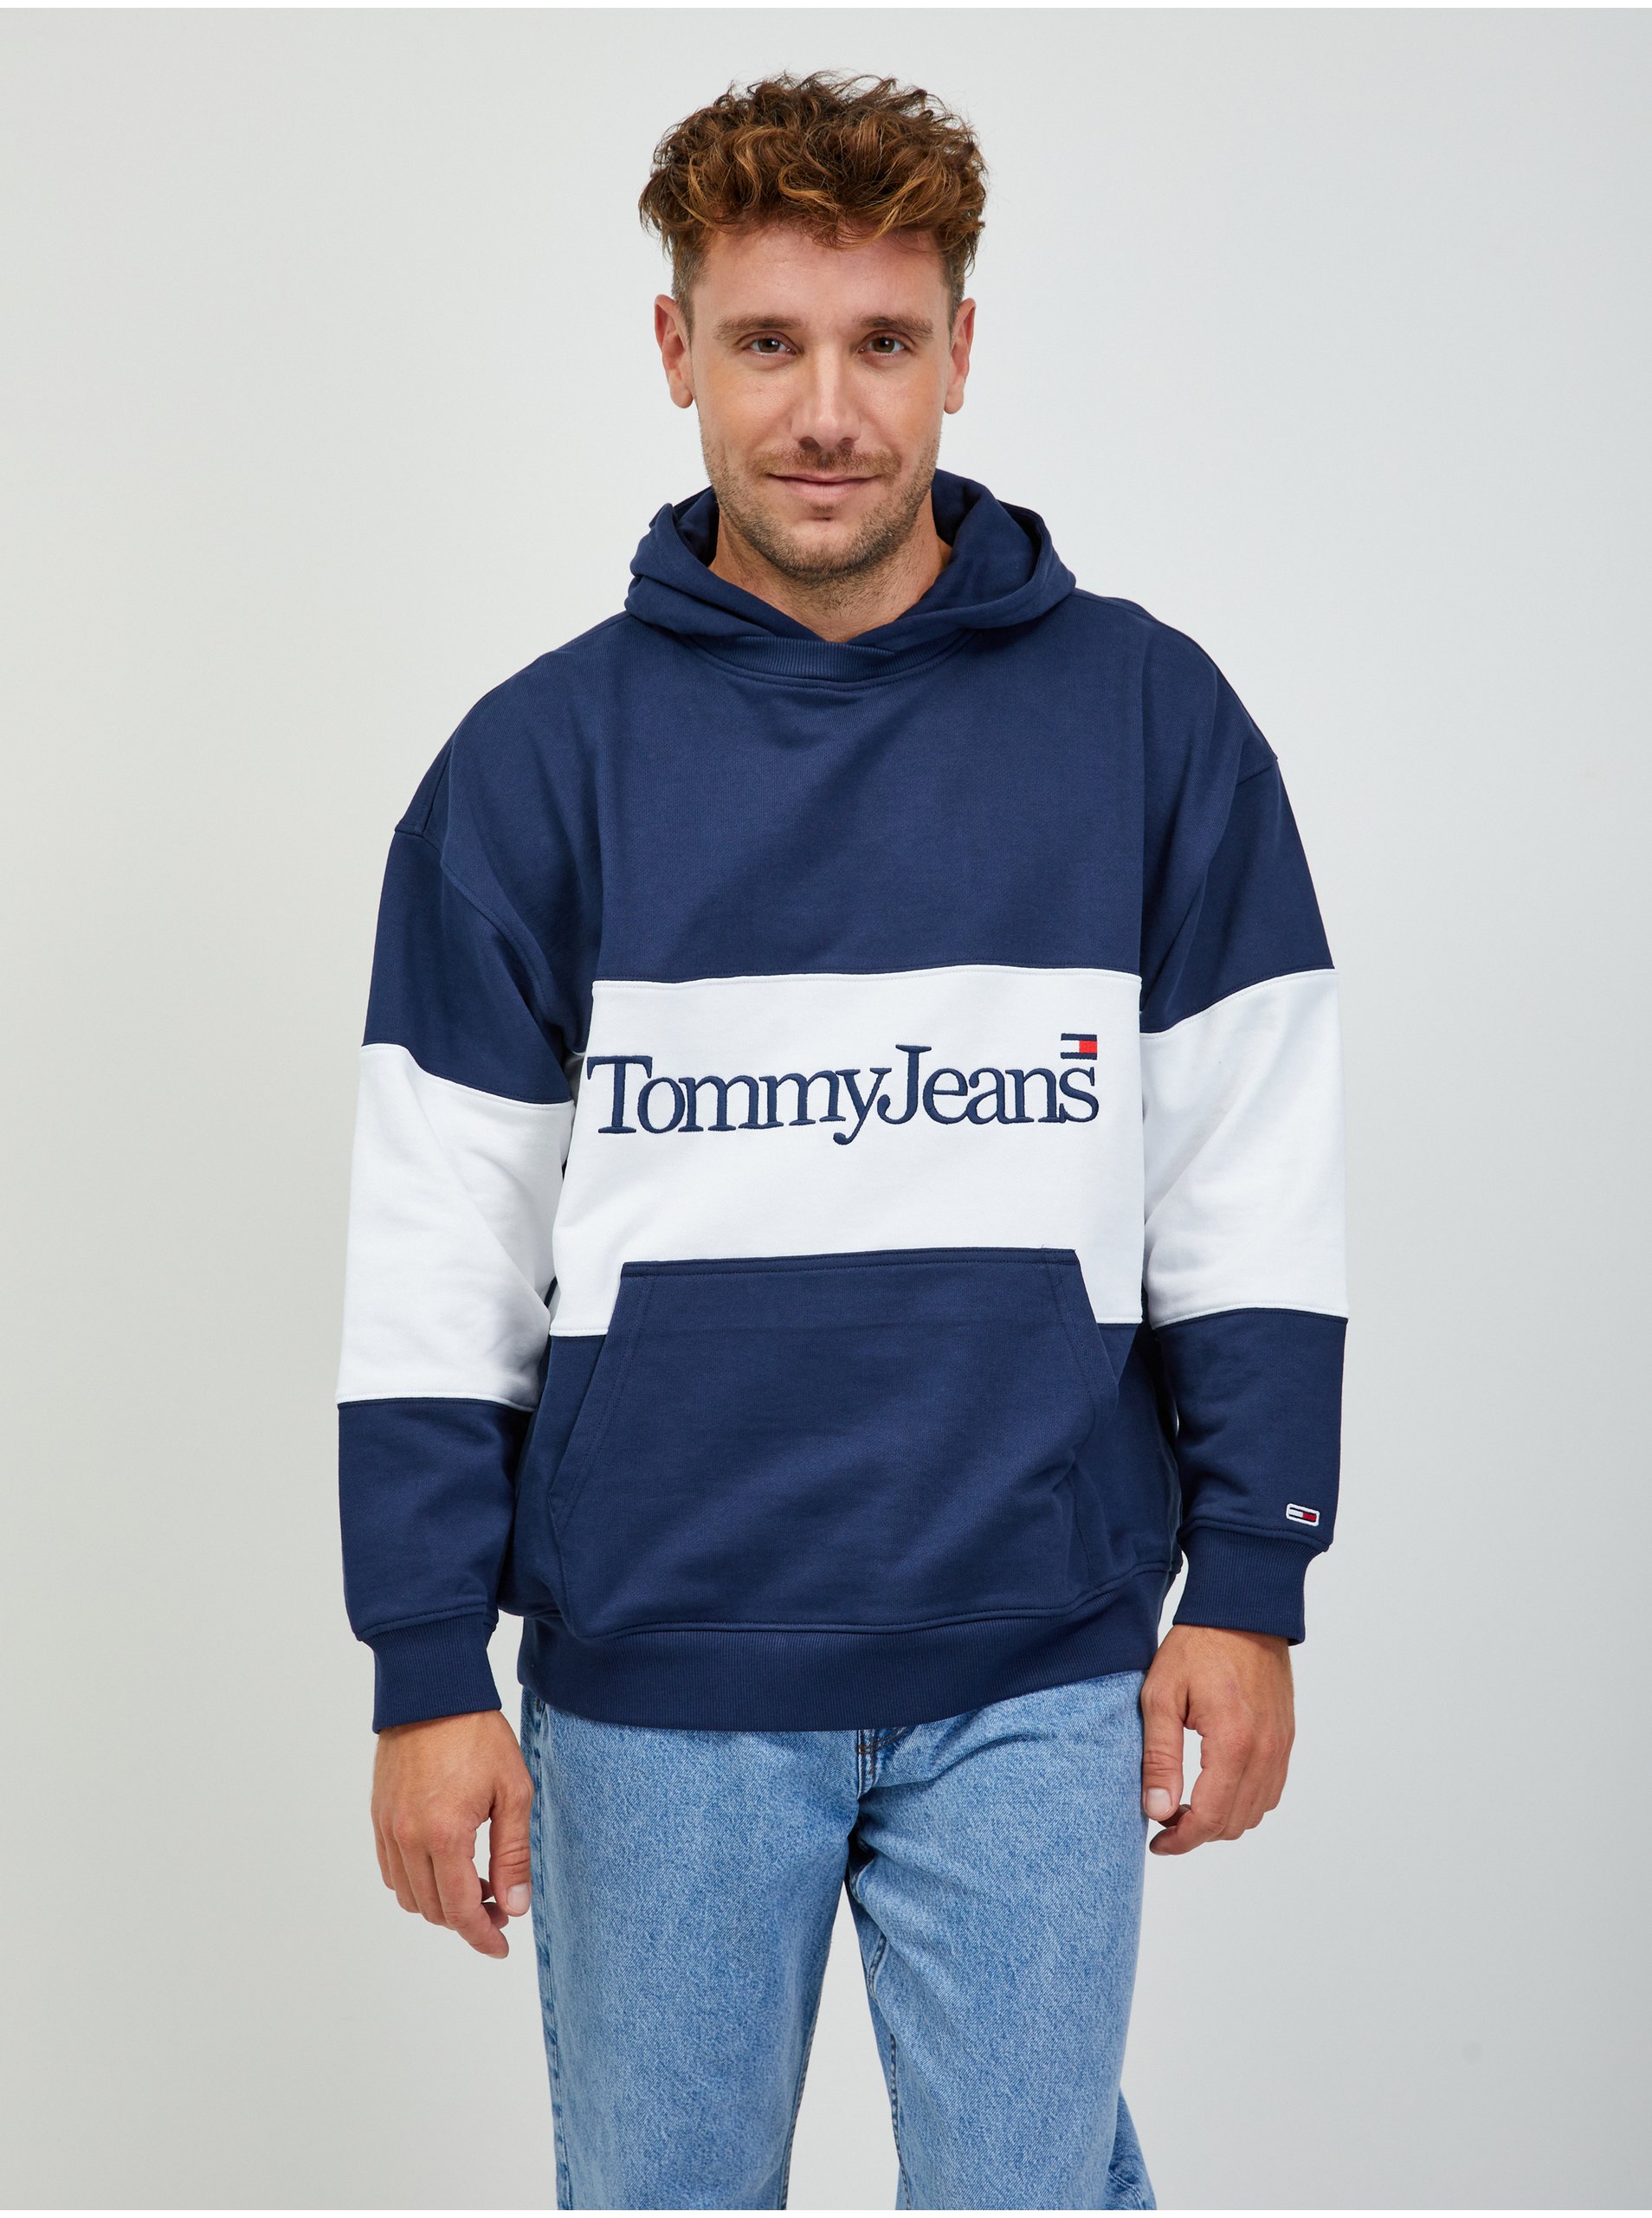 E-shop Mikiny s kapucou pre mužov Tommy Jeans - tmavomodrá, biela